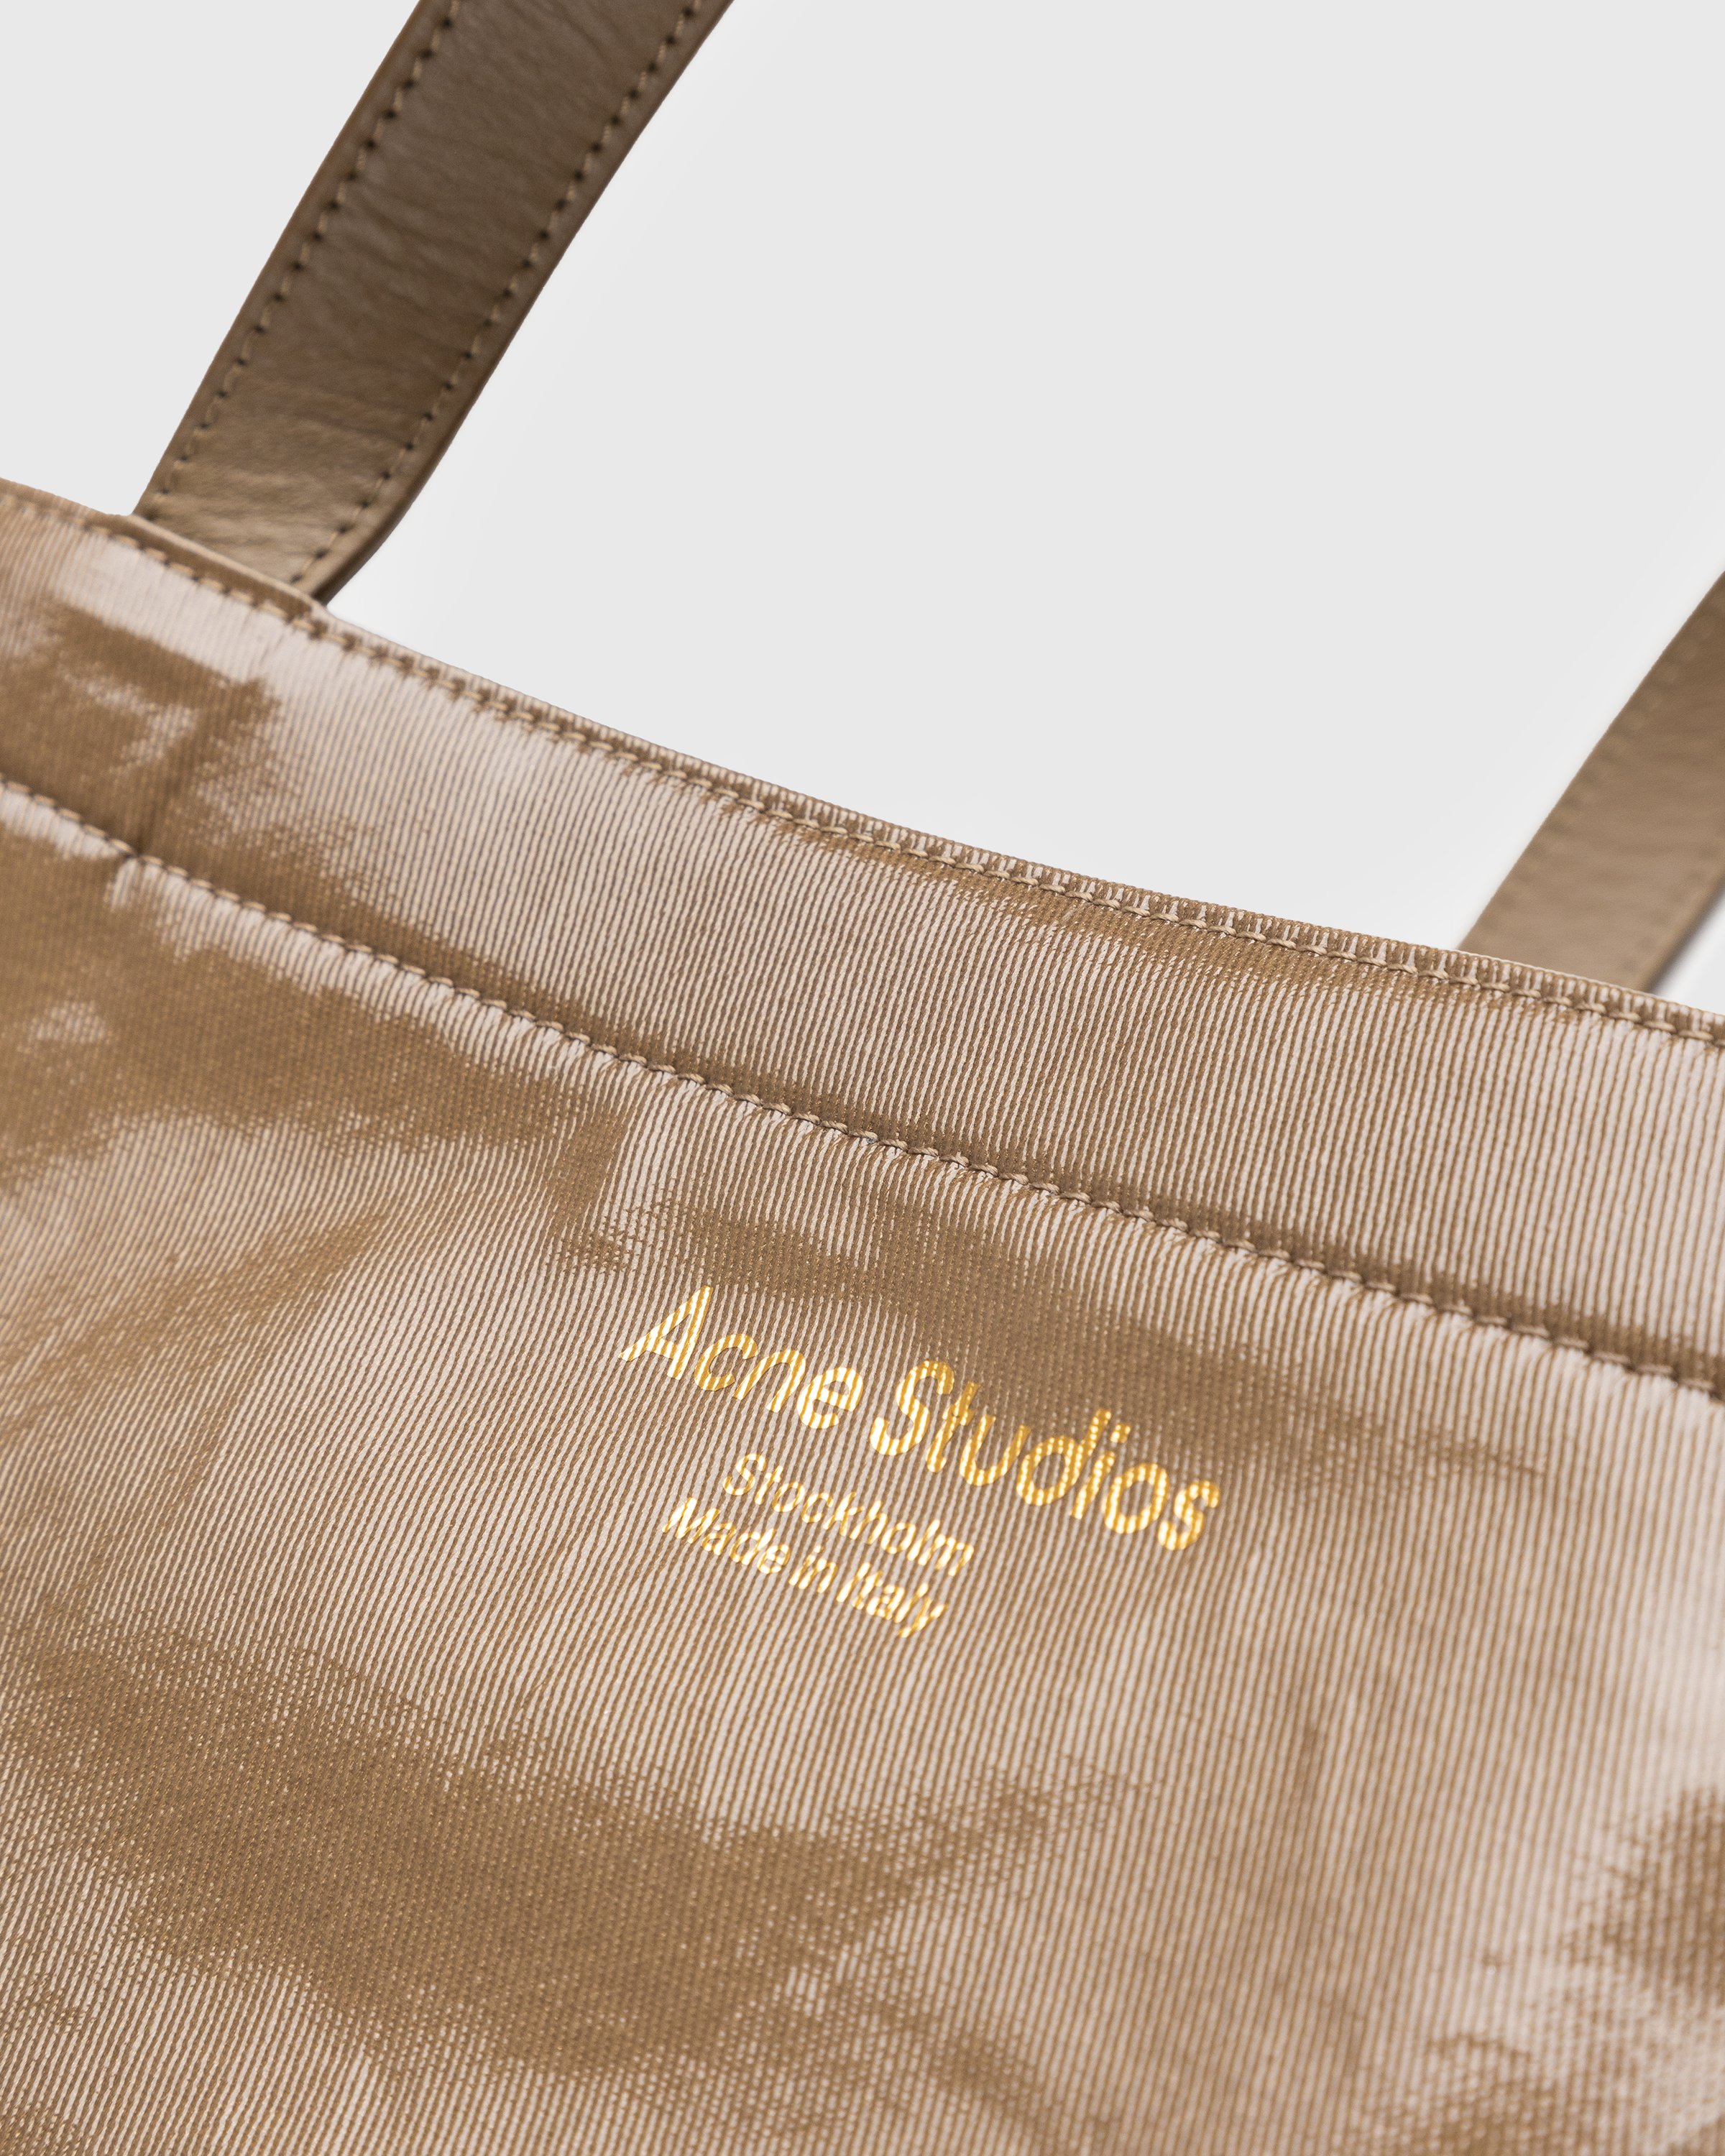 Acne Studios - Oilcloth Tote Bag Hunter Green - Accessories - Brown - Image 4